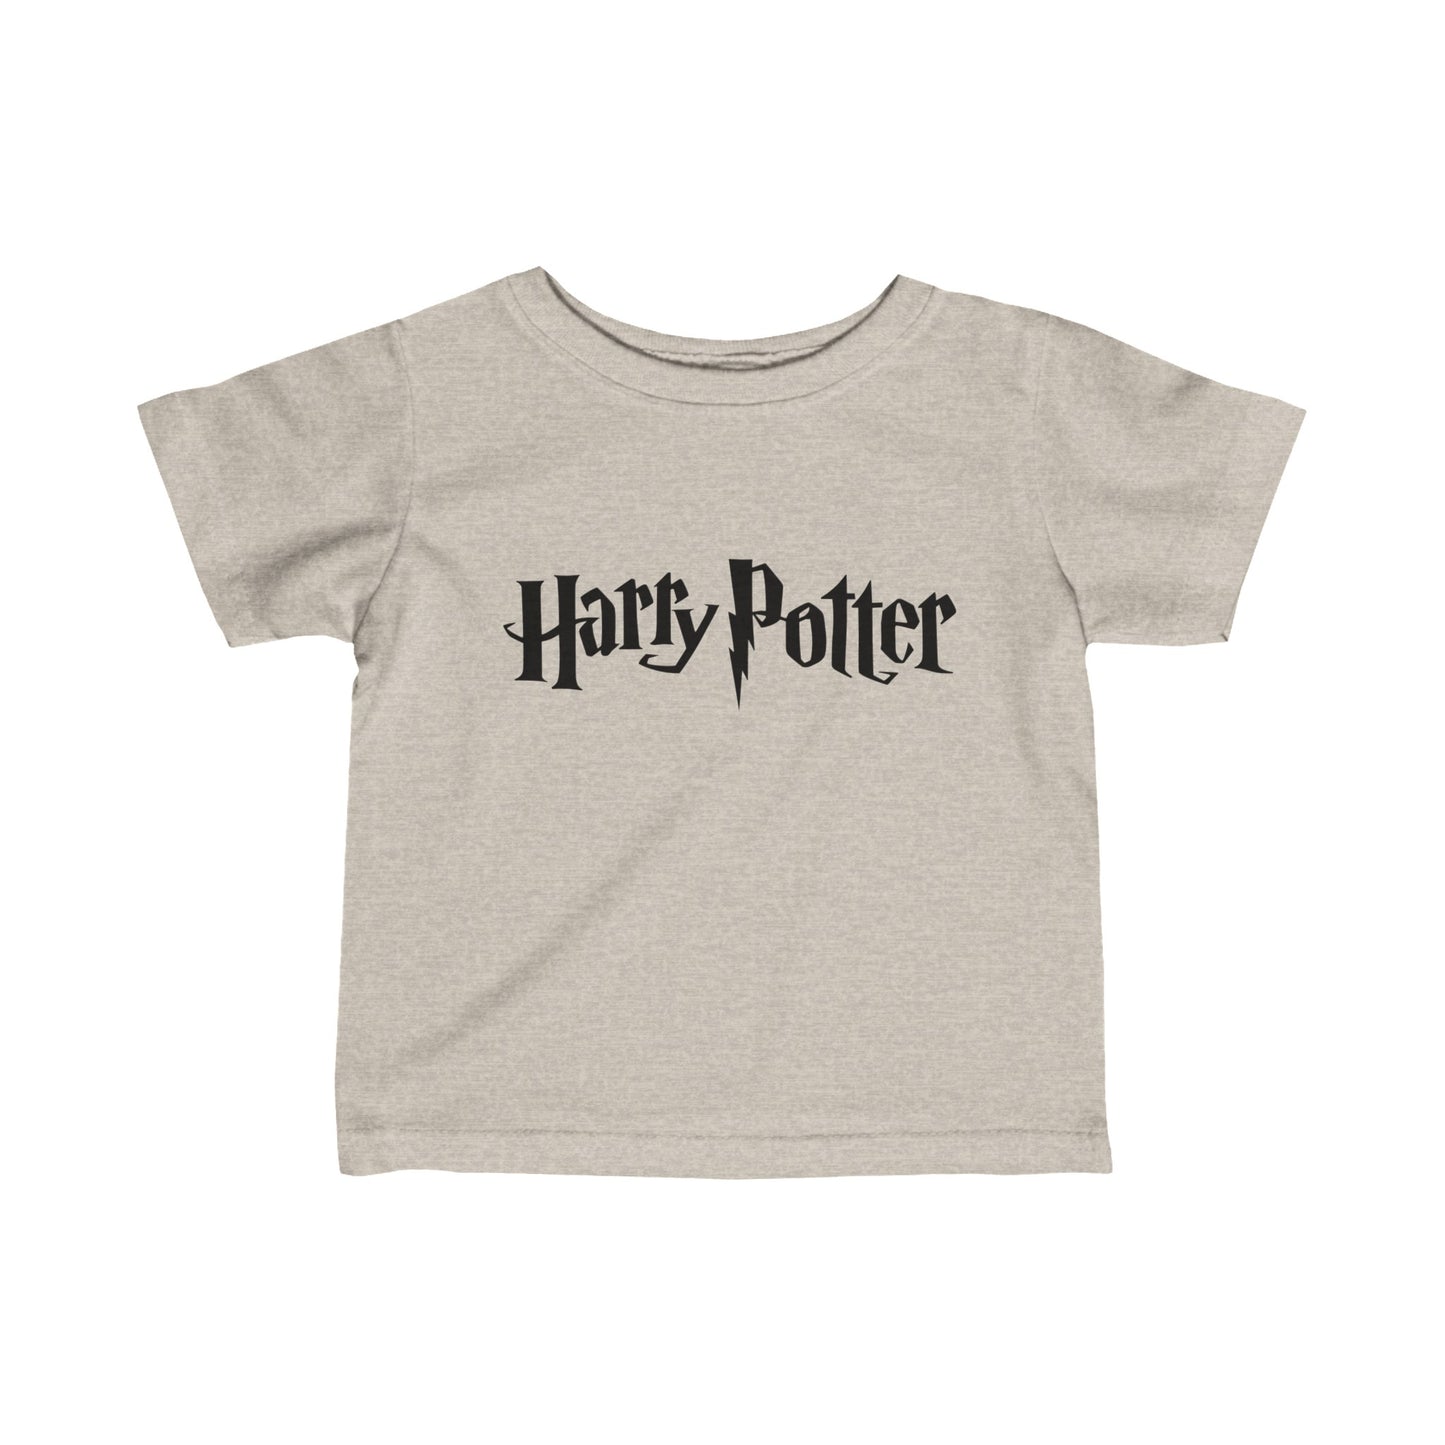 Harry Potter Baby T-Shirt